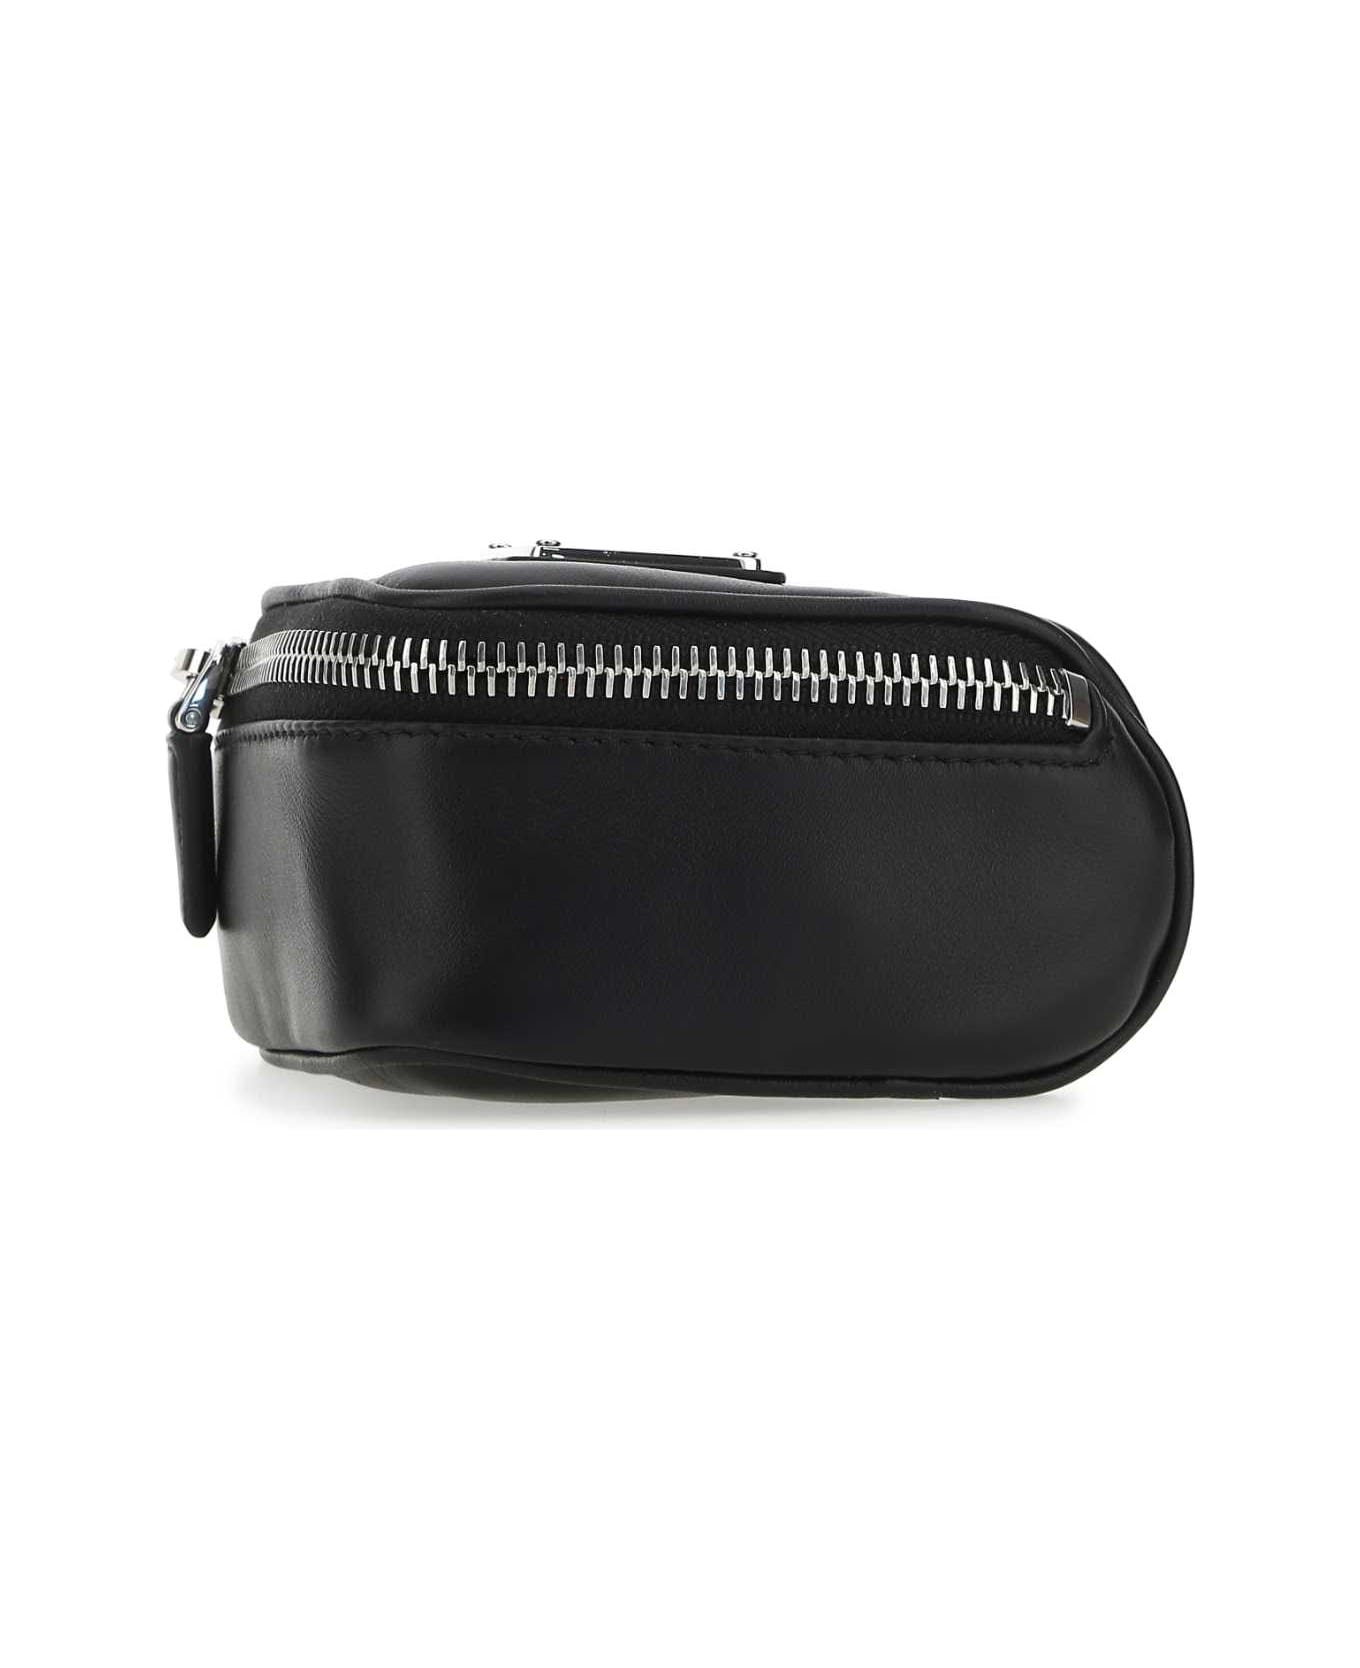 Prada Black Leather Case - F0002